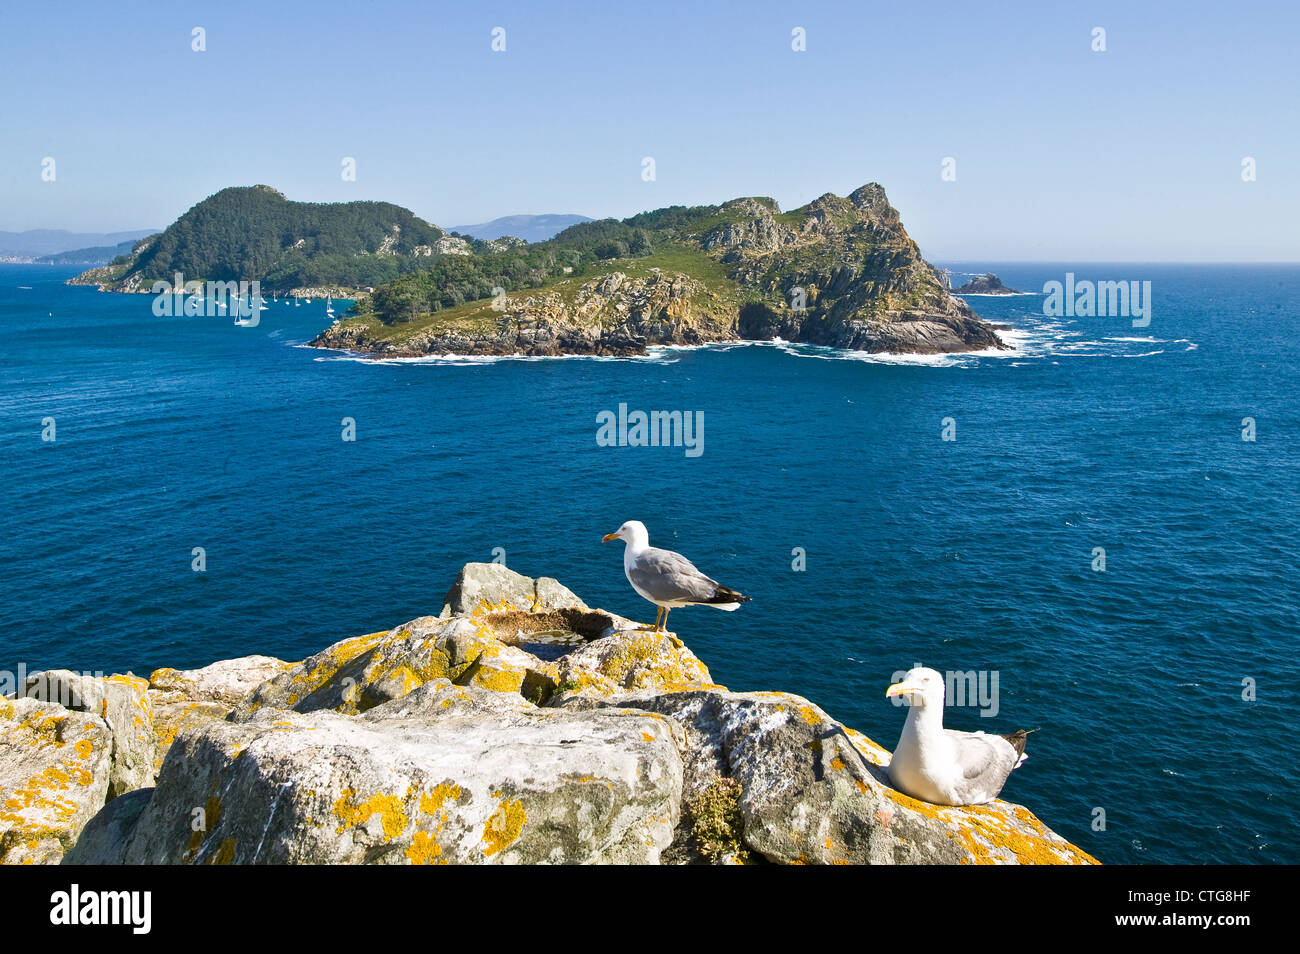 Island of Cies, atlantic coast, Spain Stock Photo